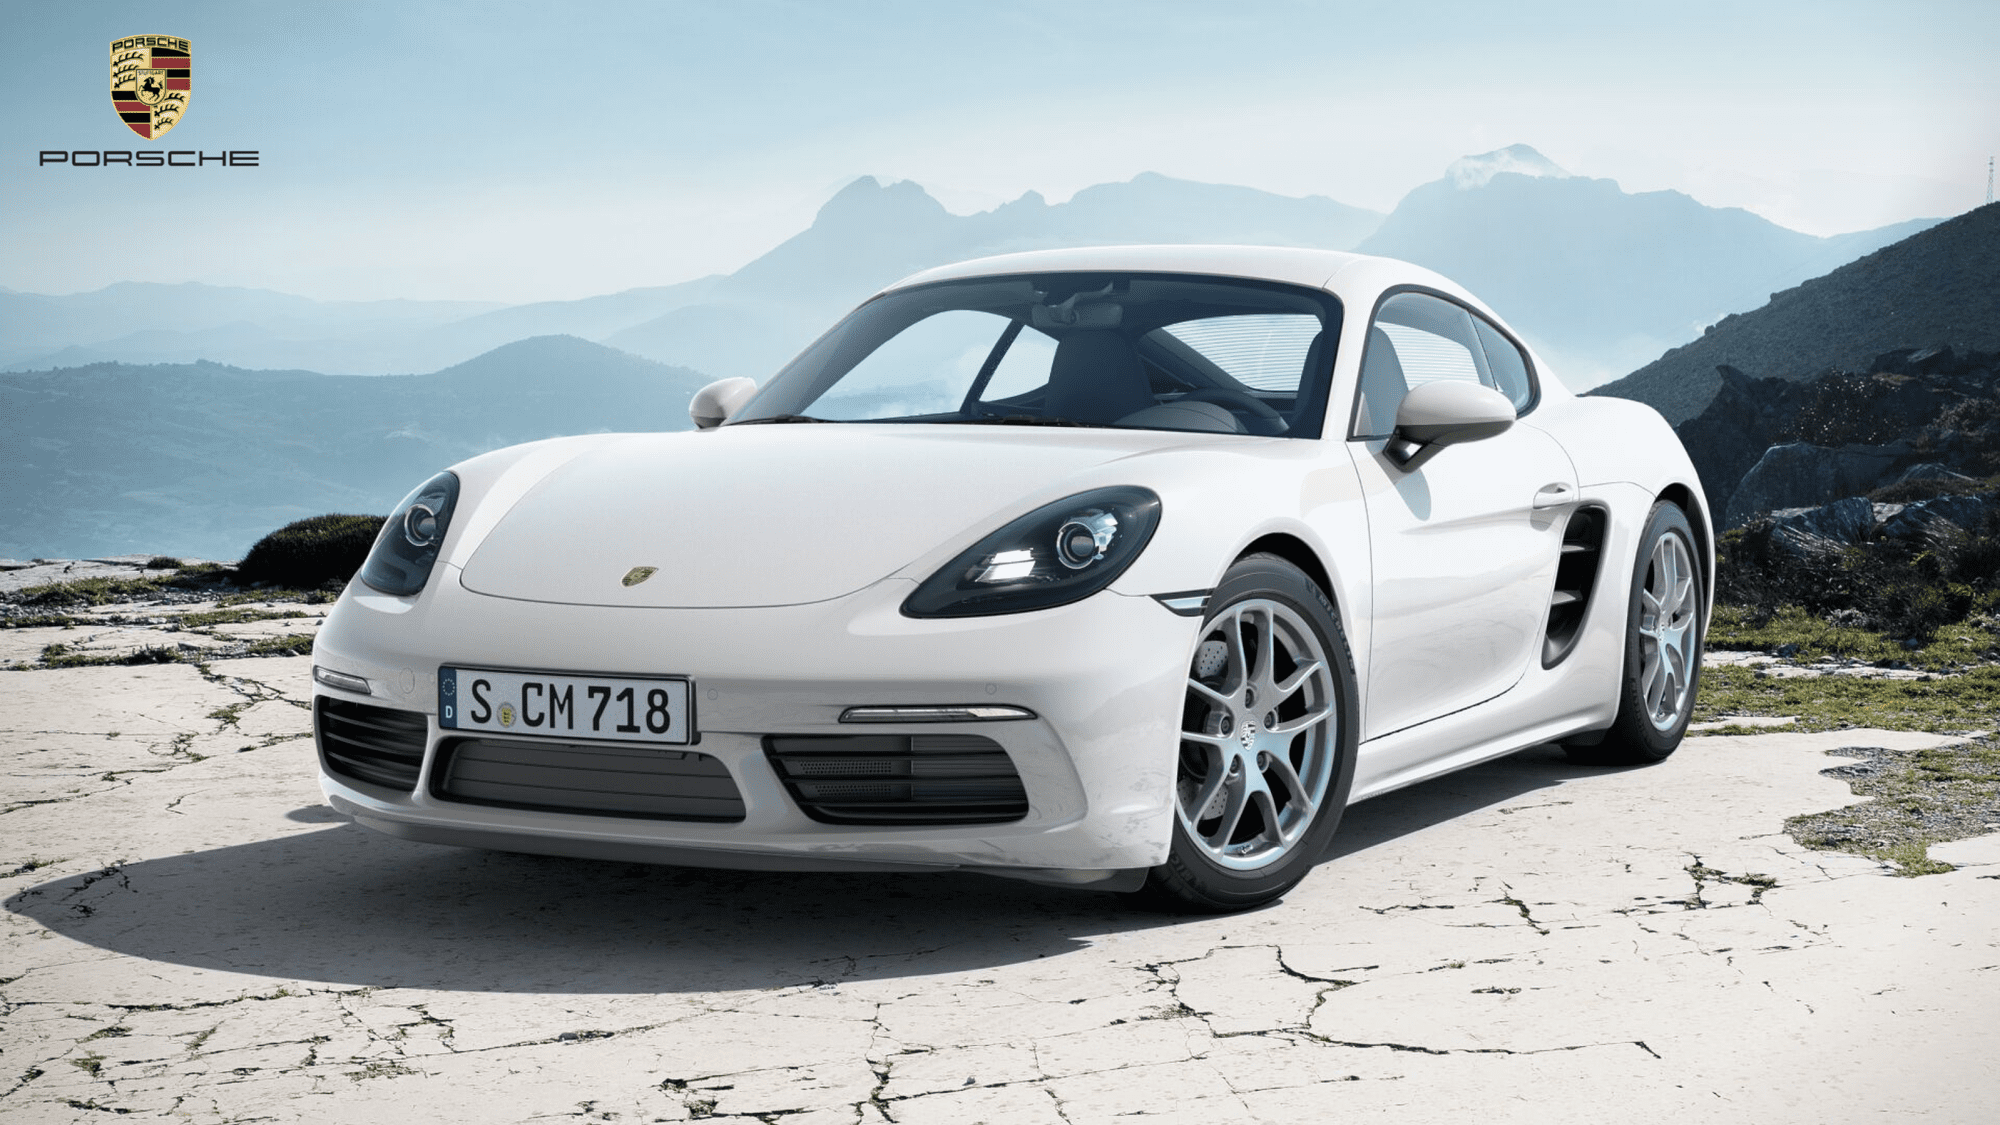 Porsche is a premium German automobile brand